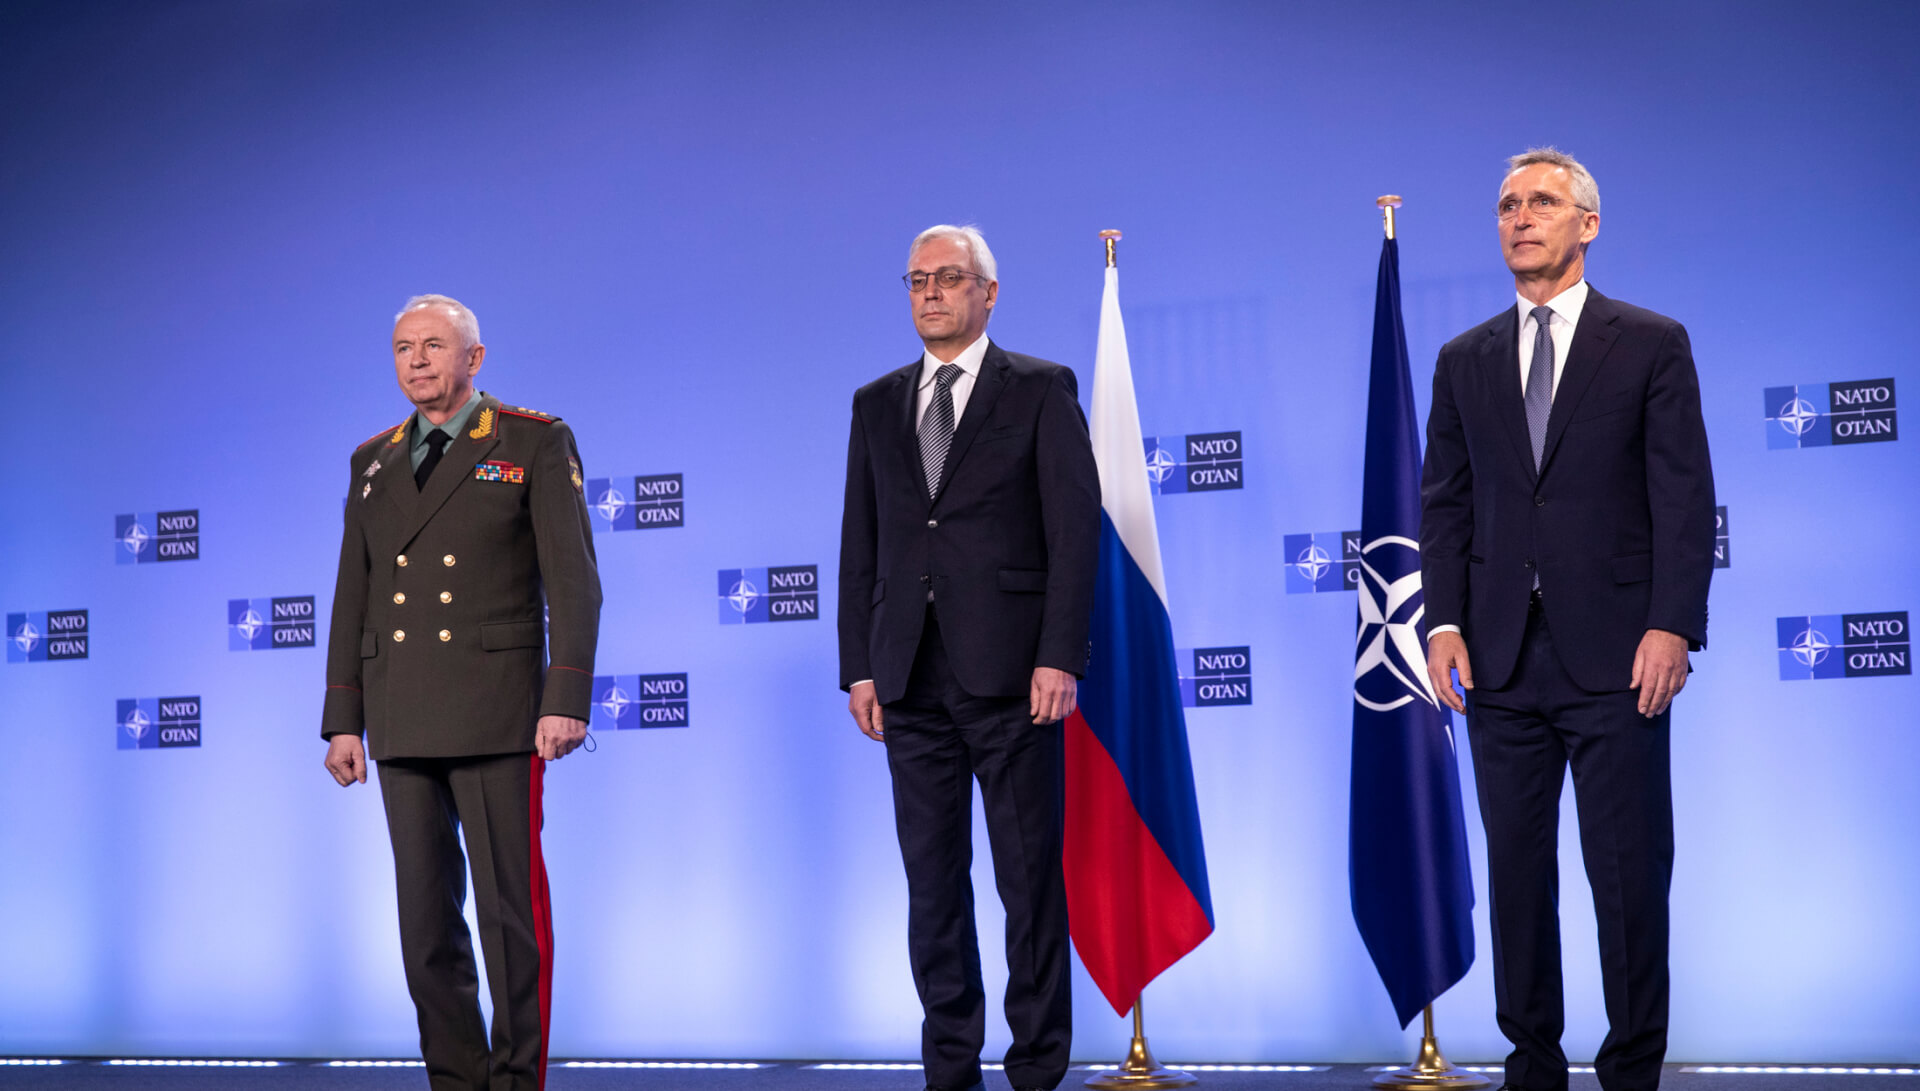 NATO, Russia in Deadlock Over Ukraine Crisis After Brussels Talks